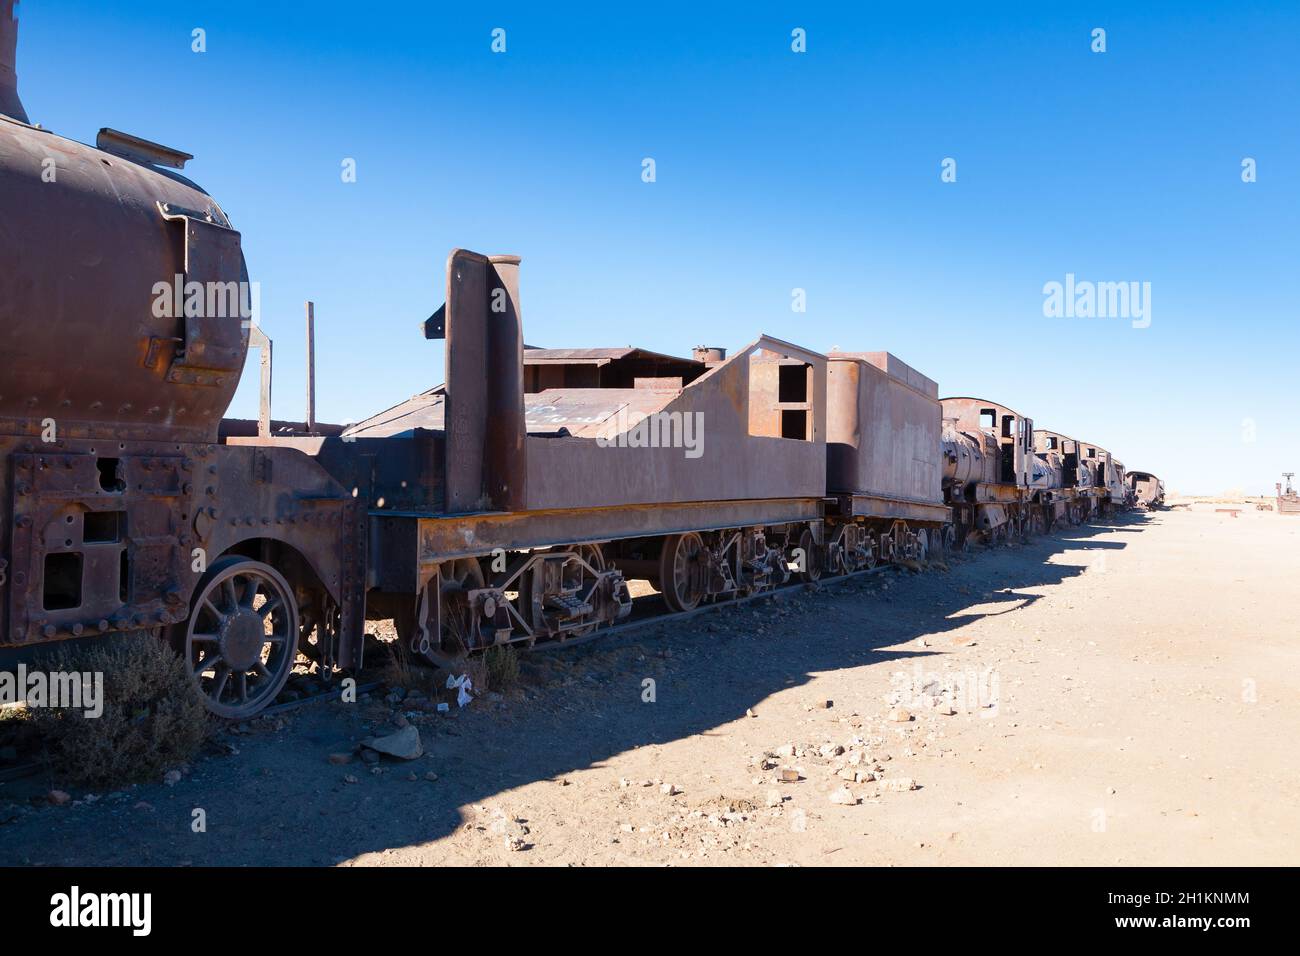 Cemetery trains view from Uyuni, Bolivia. Bolivian landmark. Abandoned locomotives Stock Photo